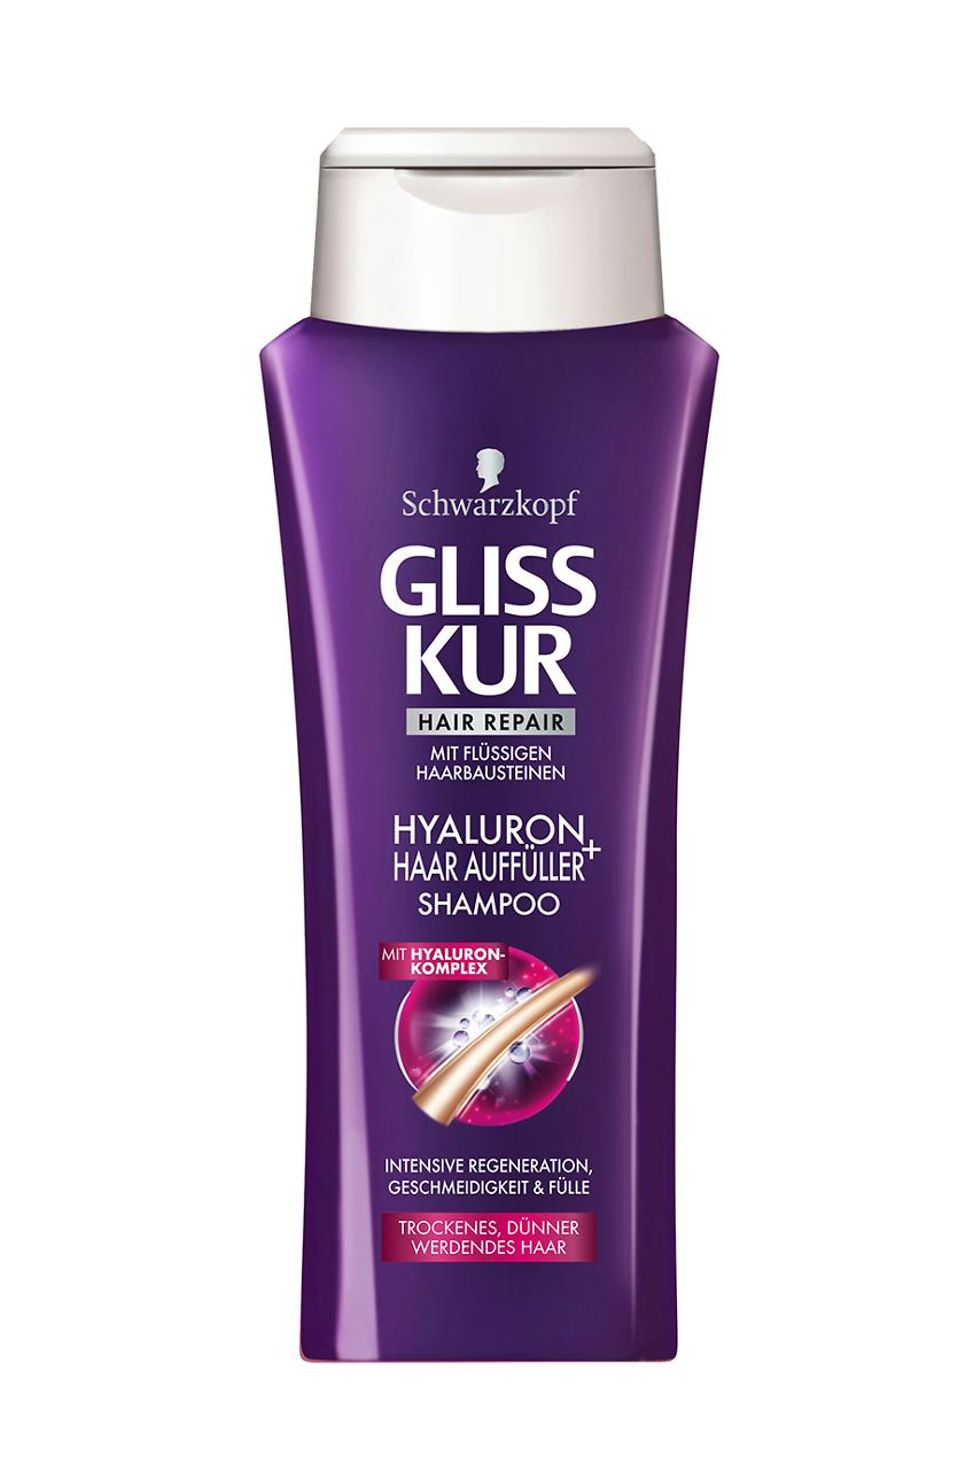 Gliss Kur Hyaluron + Haar Auffüller Shampoo